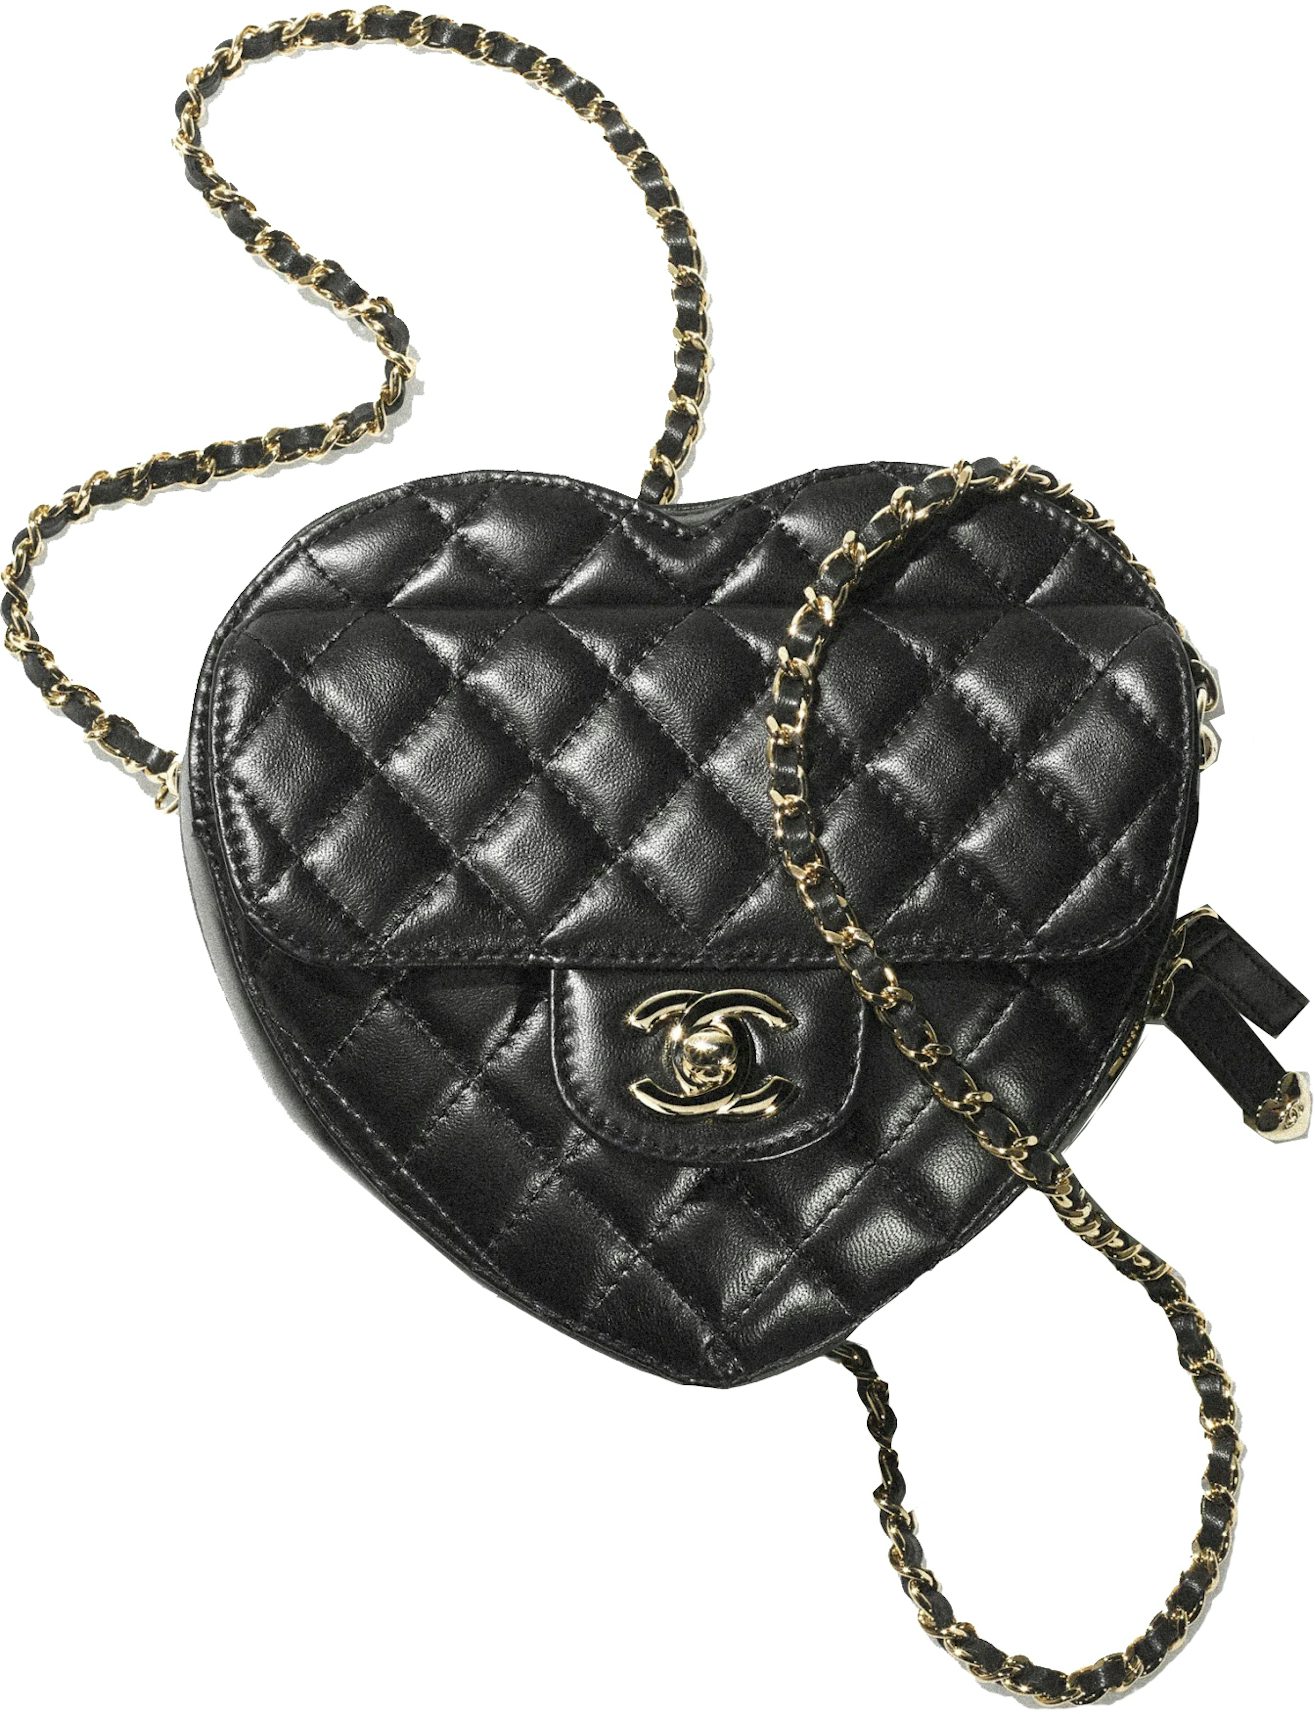 Chanel 2-Tone Crystal Bag - Limited Edition